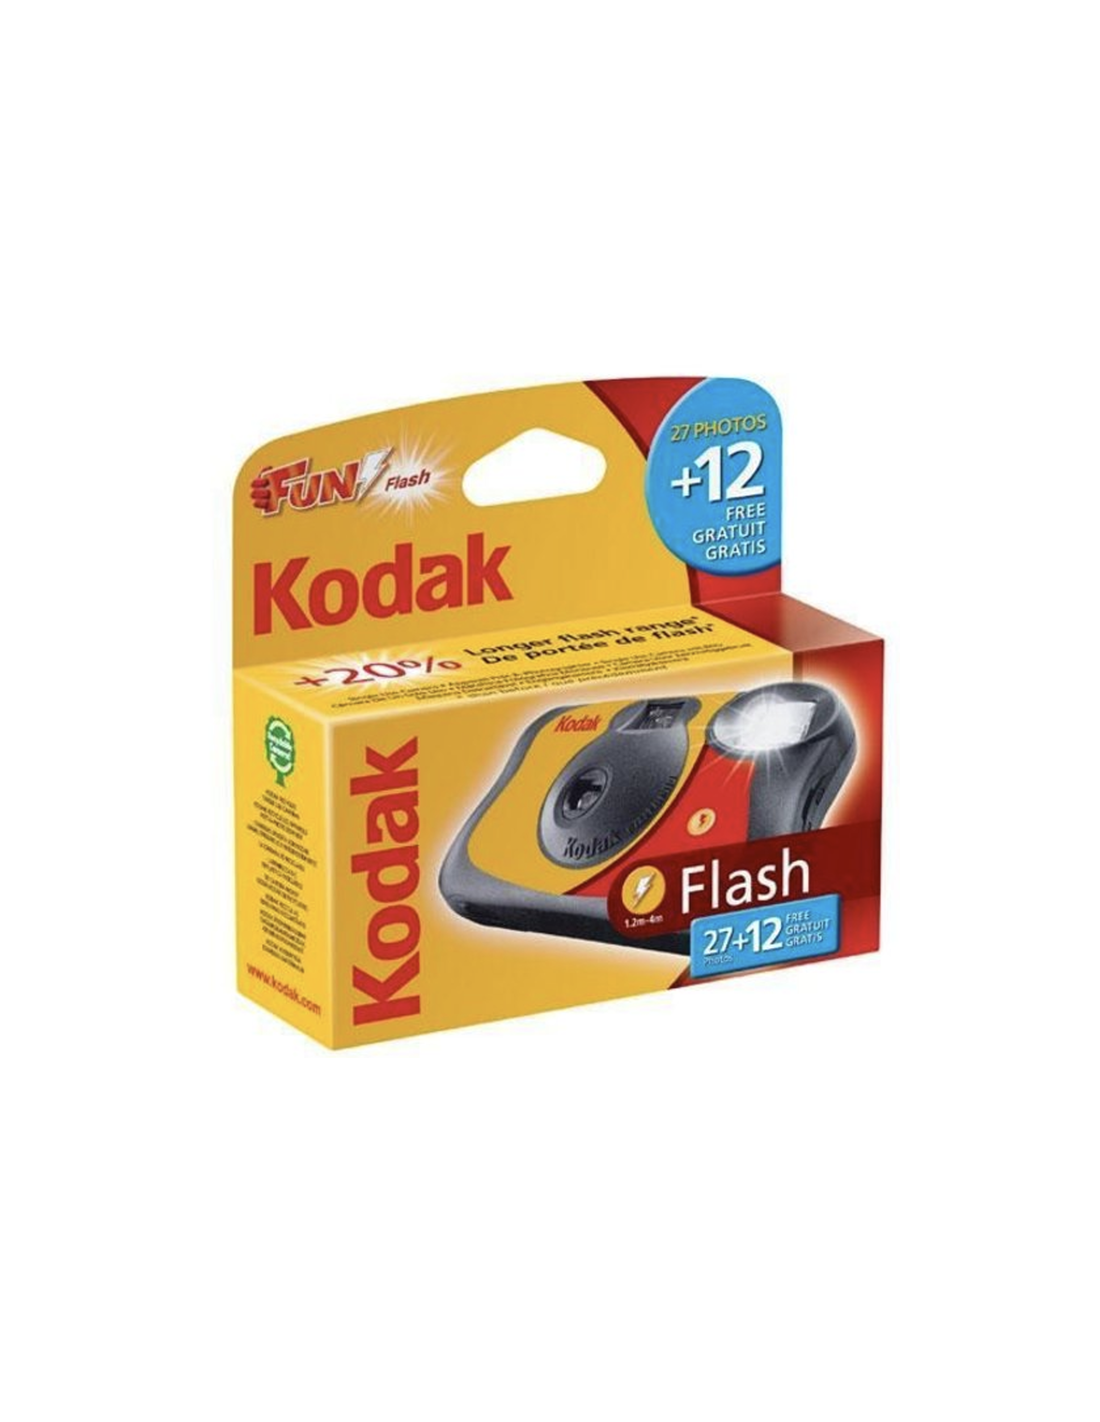 Kodak FunSaver  Camara desechable 27 fotos con flash